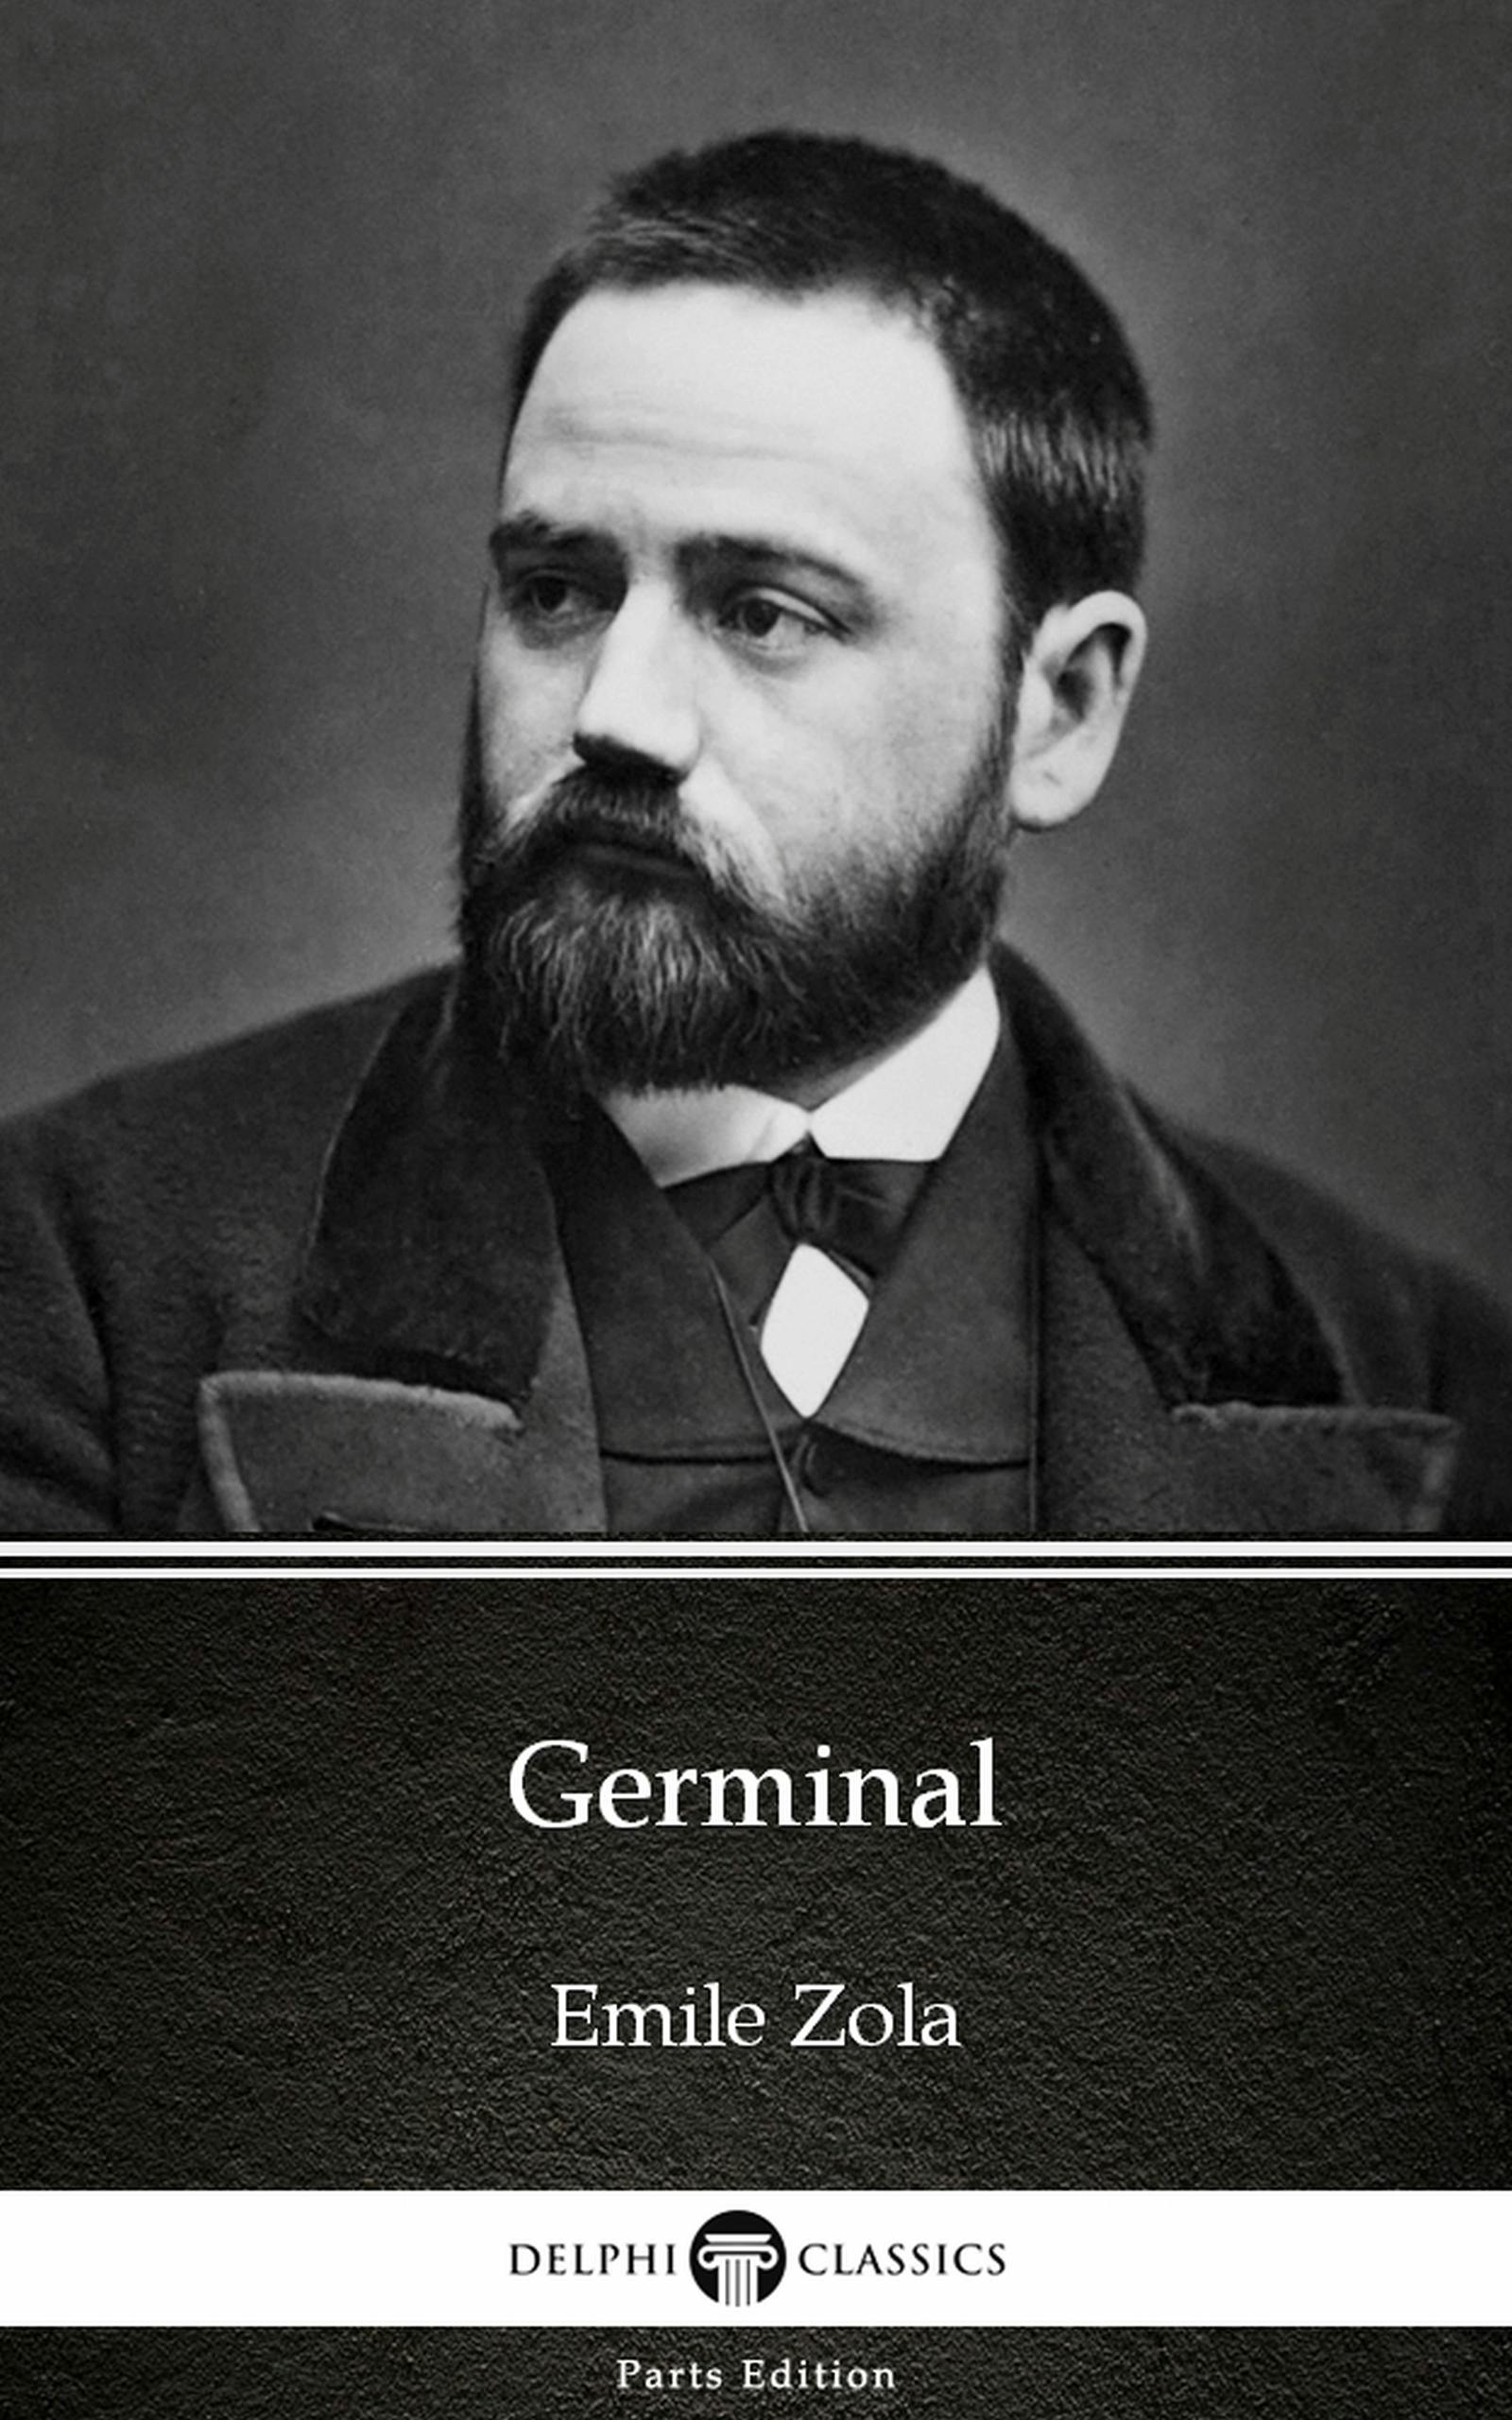 Germinal by Emile Zola (Illustrated) - Emile Zola